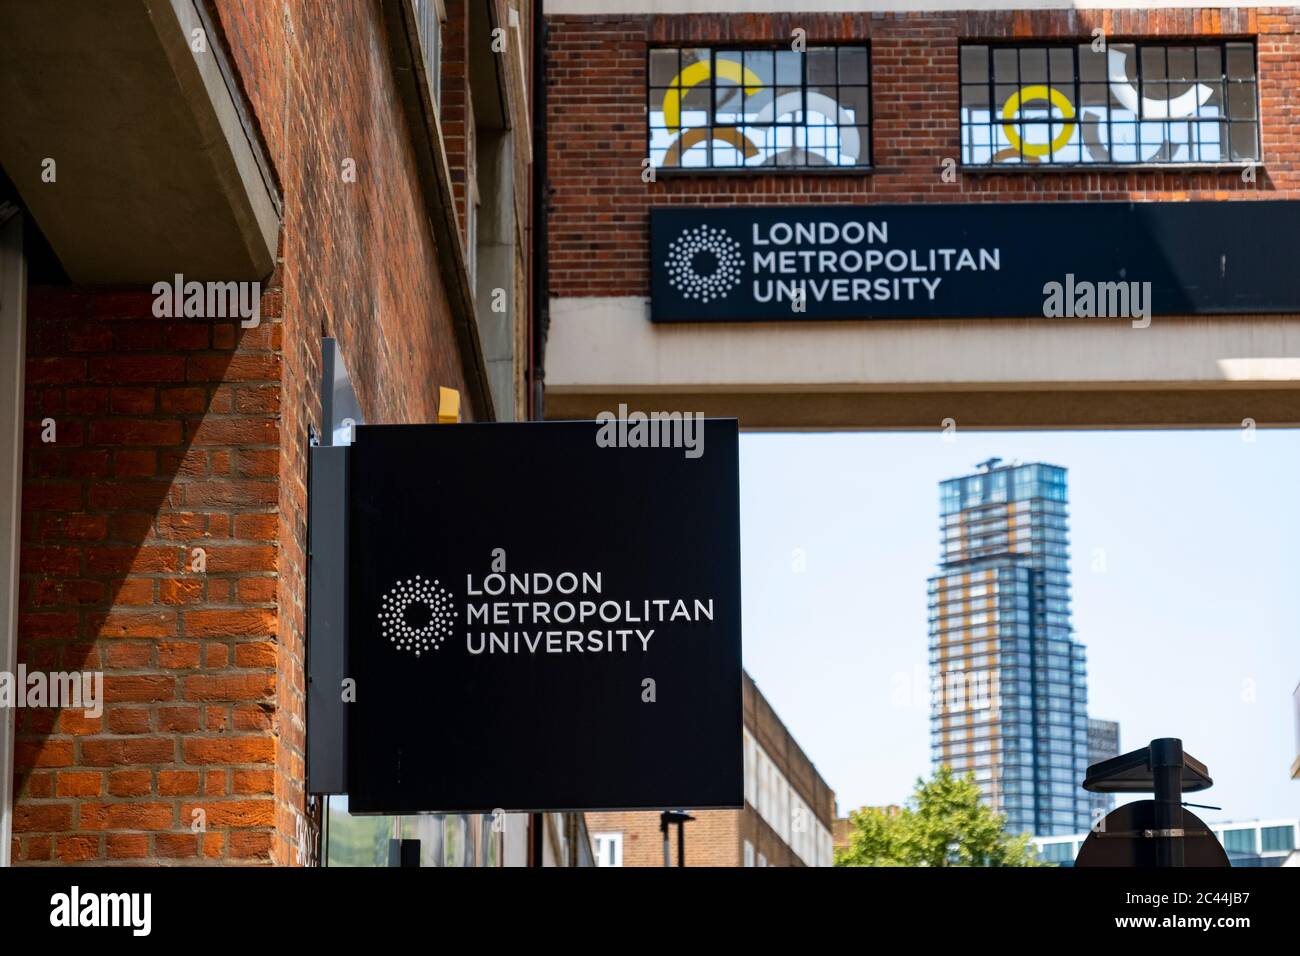 LONDON- JUNE, 2020: London Metropolitan University, or London Met, a public research university in London, England. Stock Photo